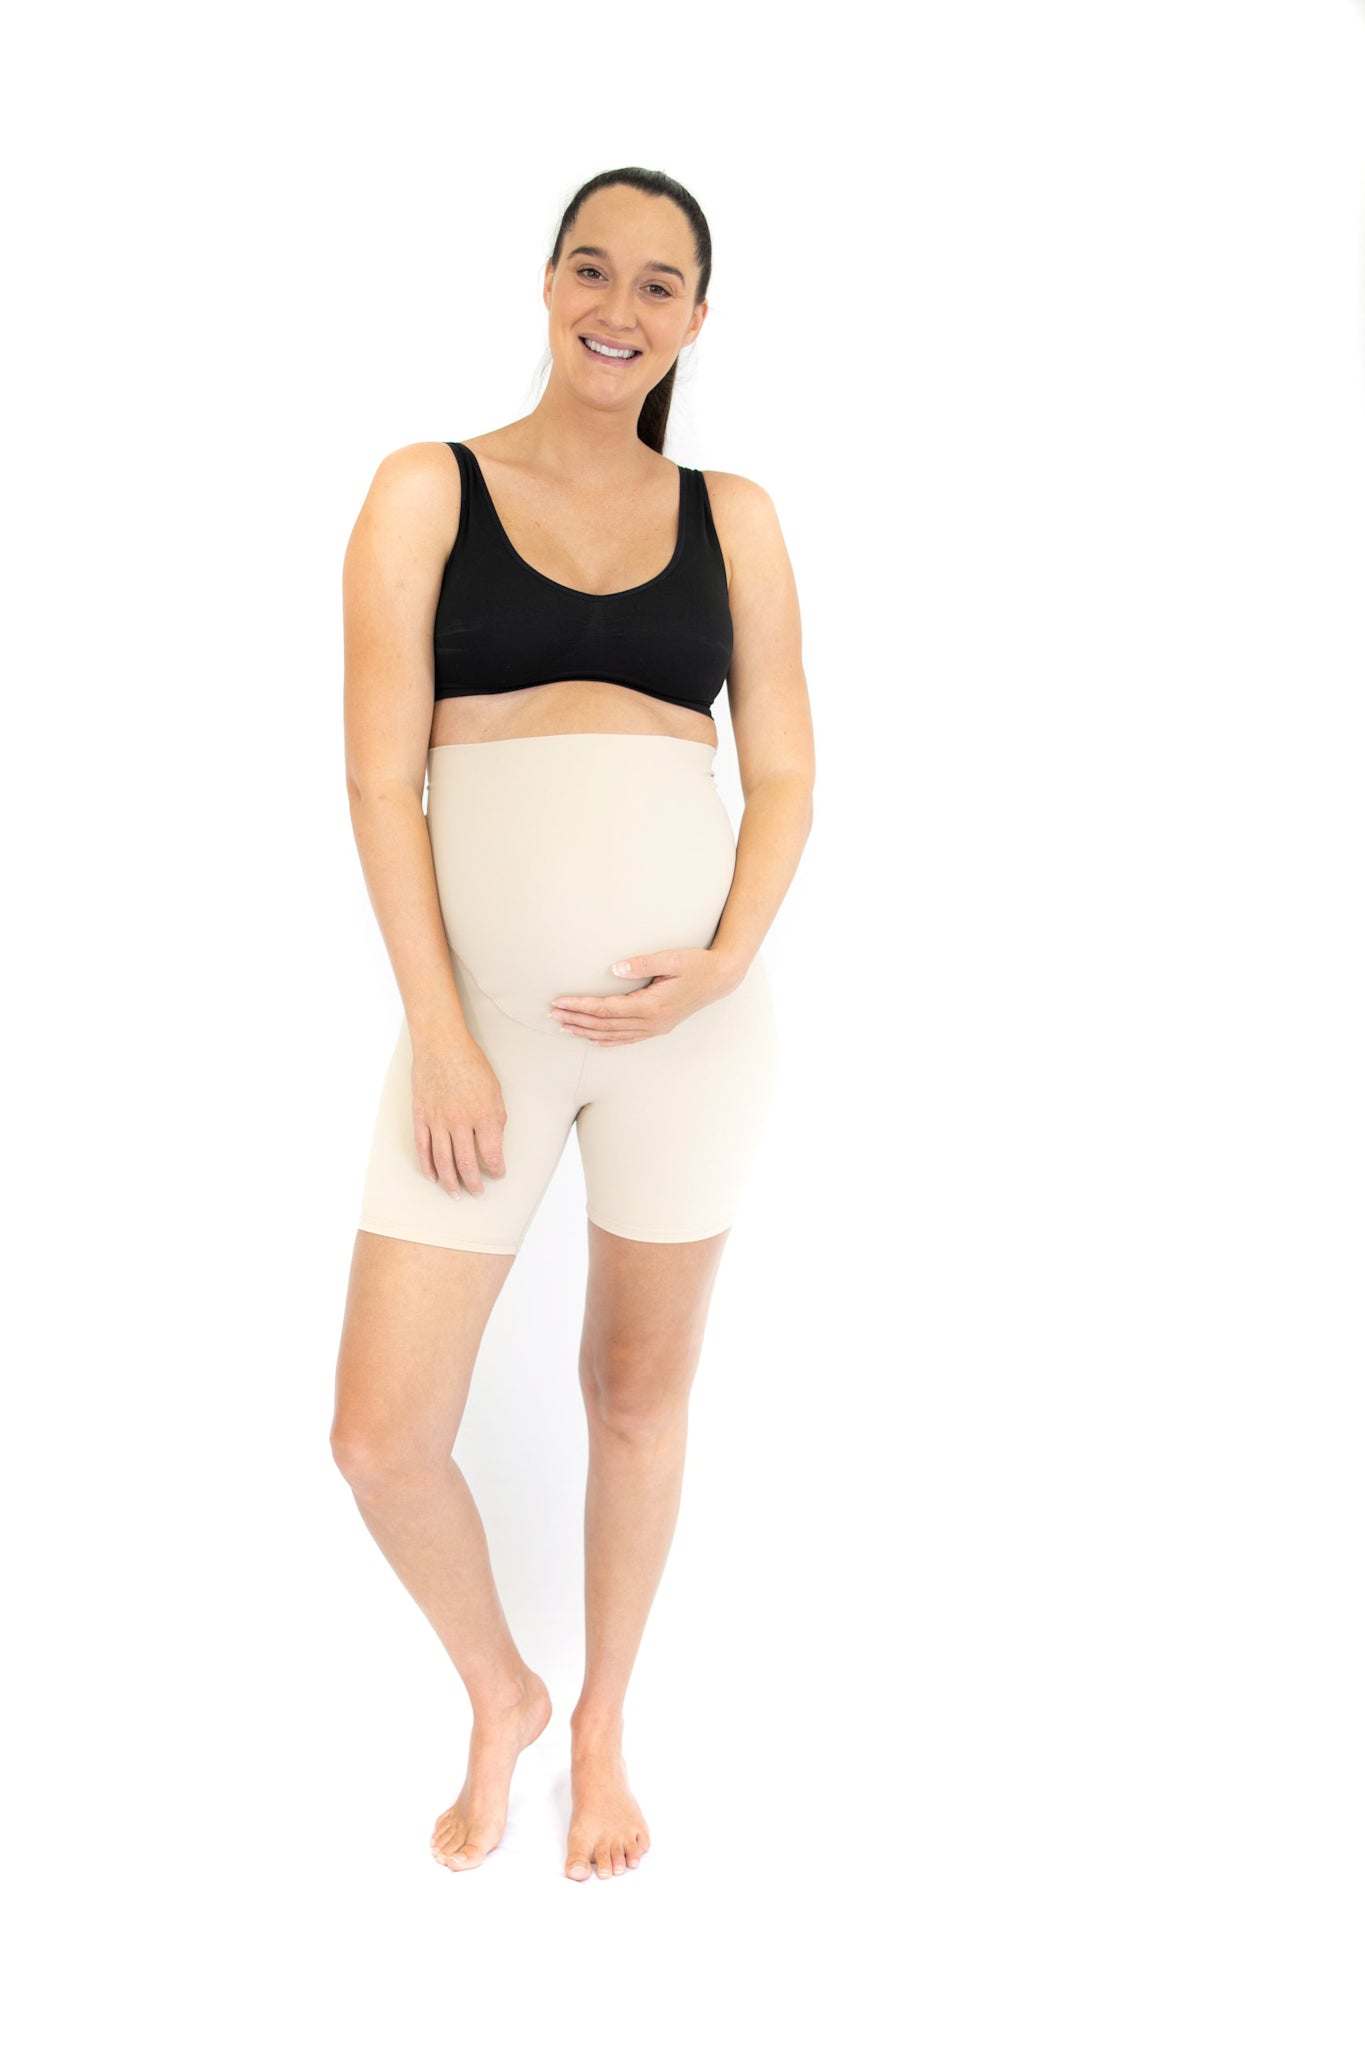 Emamaco leggings review (maternity activewear) 